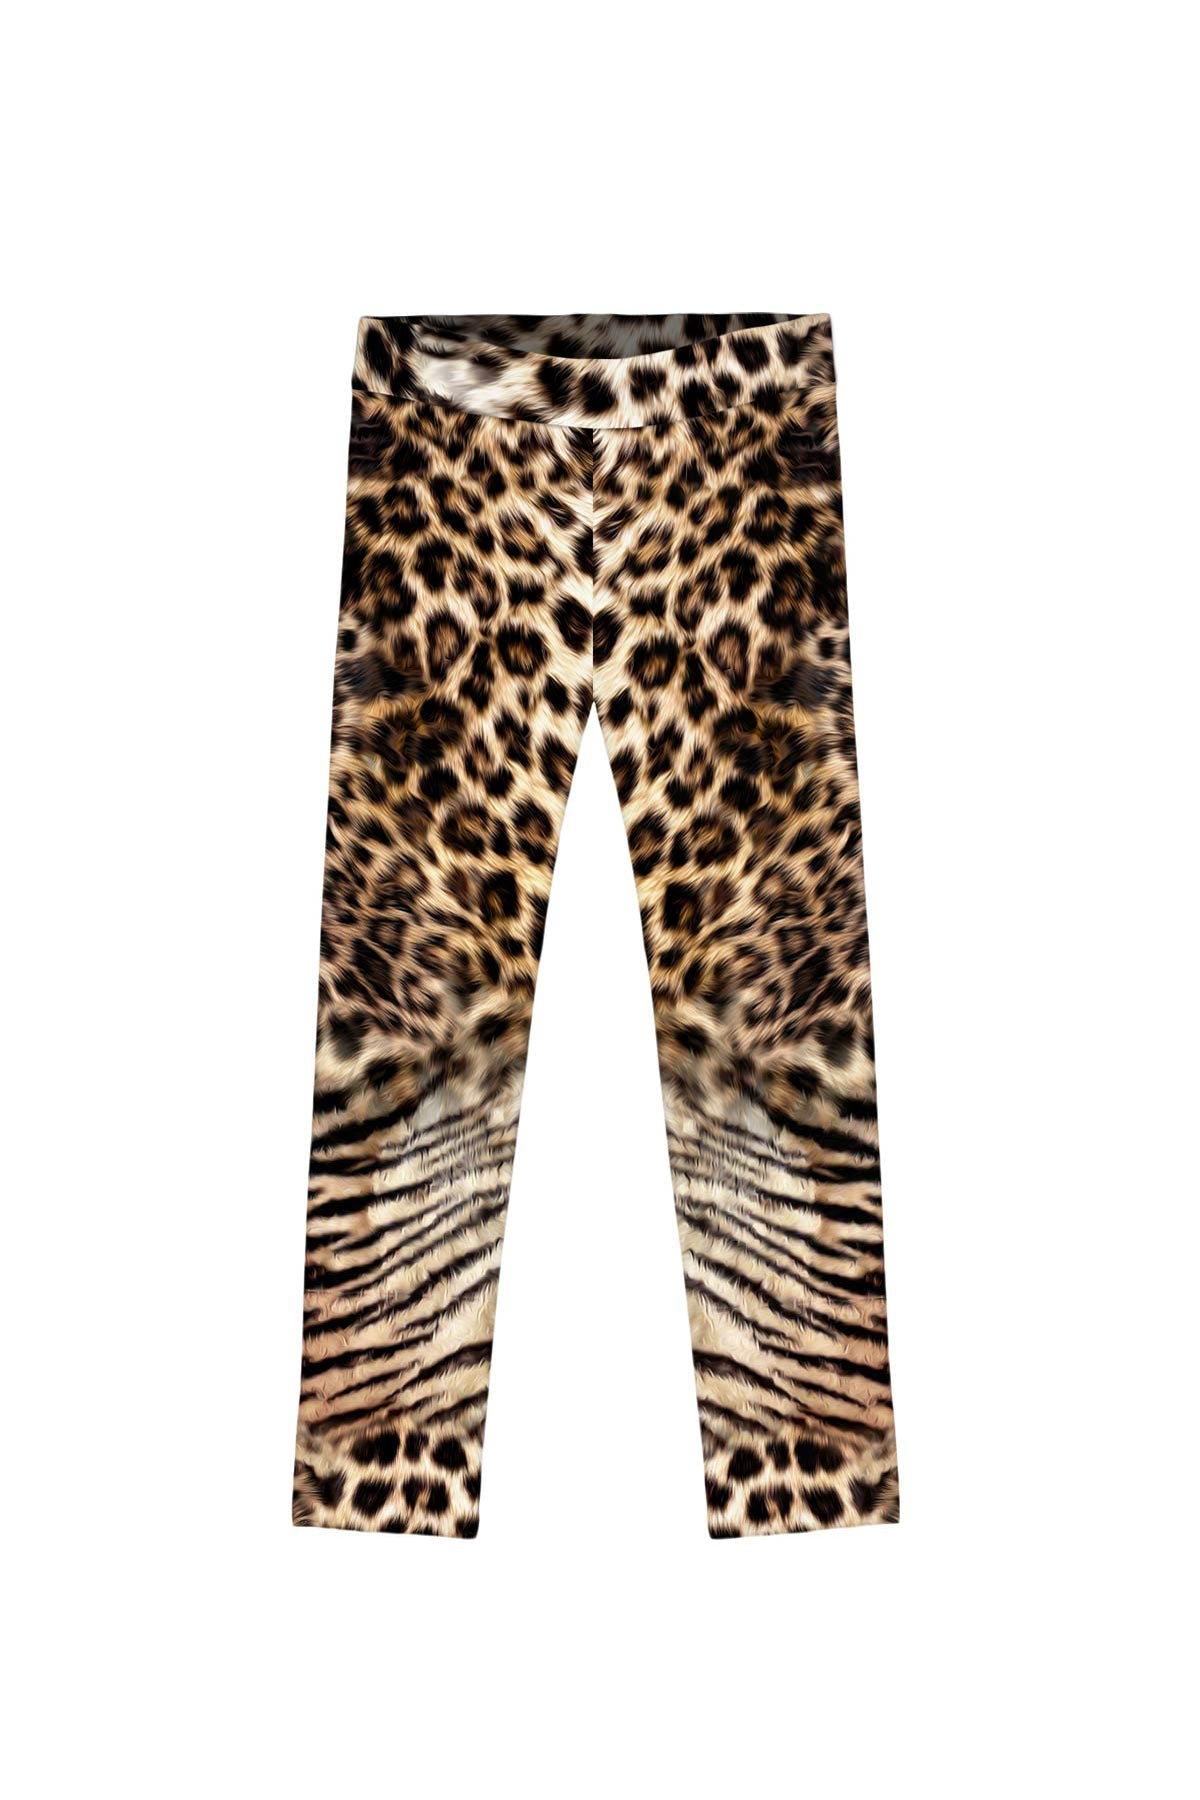 3 for $49! Wild Instinct Lucy Brown Animal Leopard Print Leggings - Kids - Pineapple Clothing